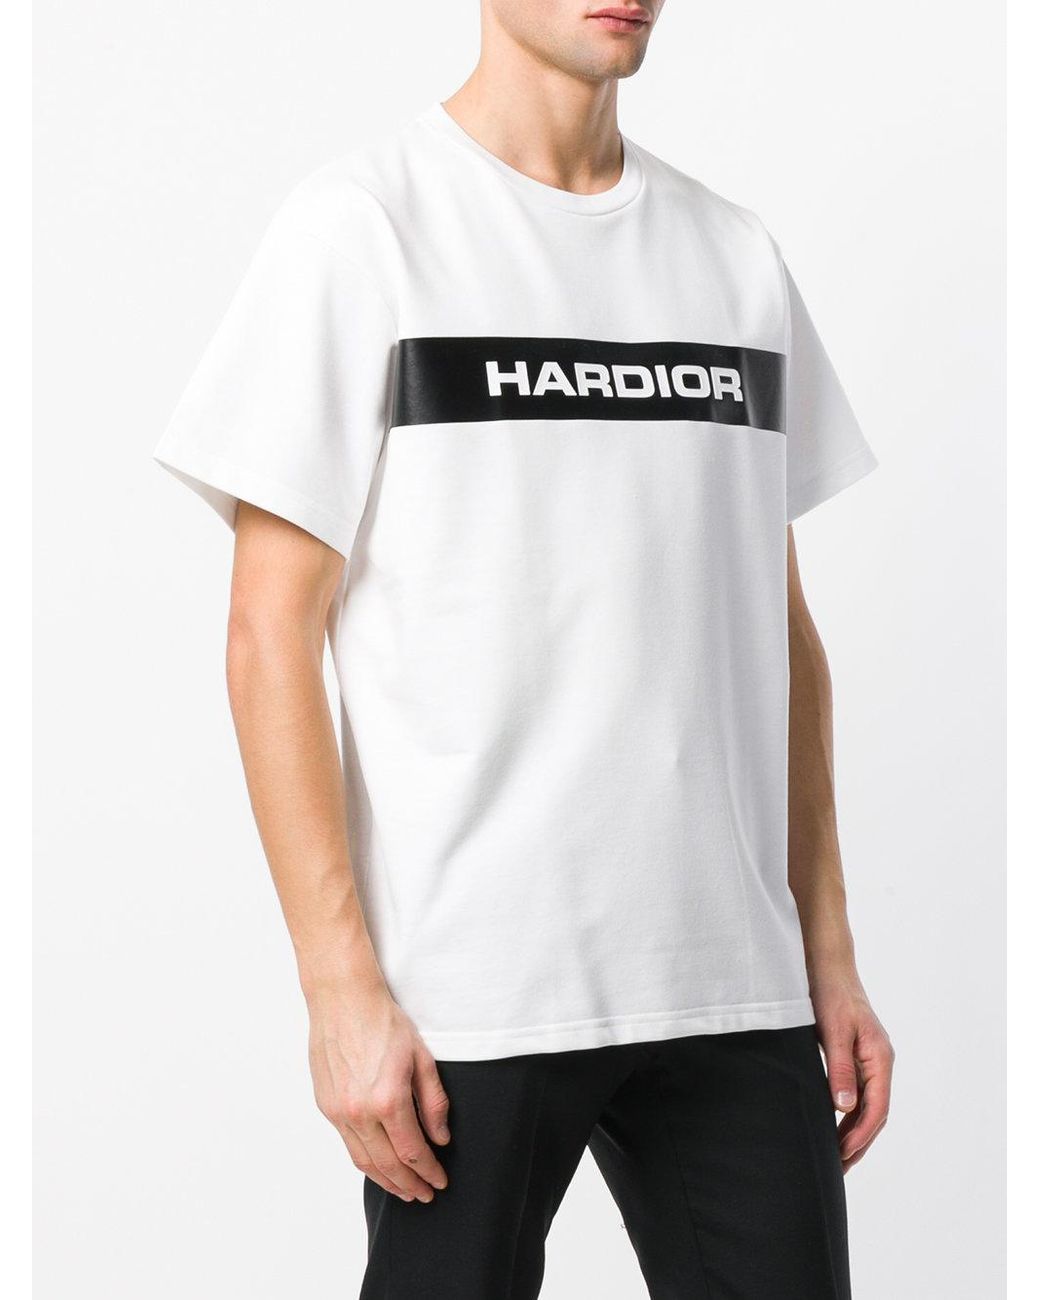 Dior Homme Hardior T-shirt in White for Men | Lyst UK